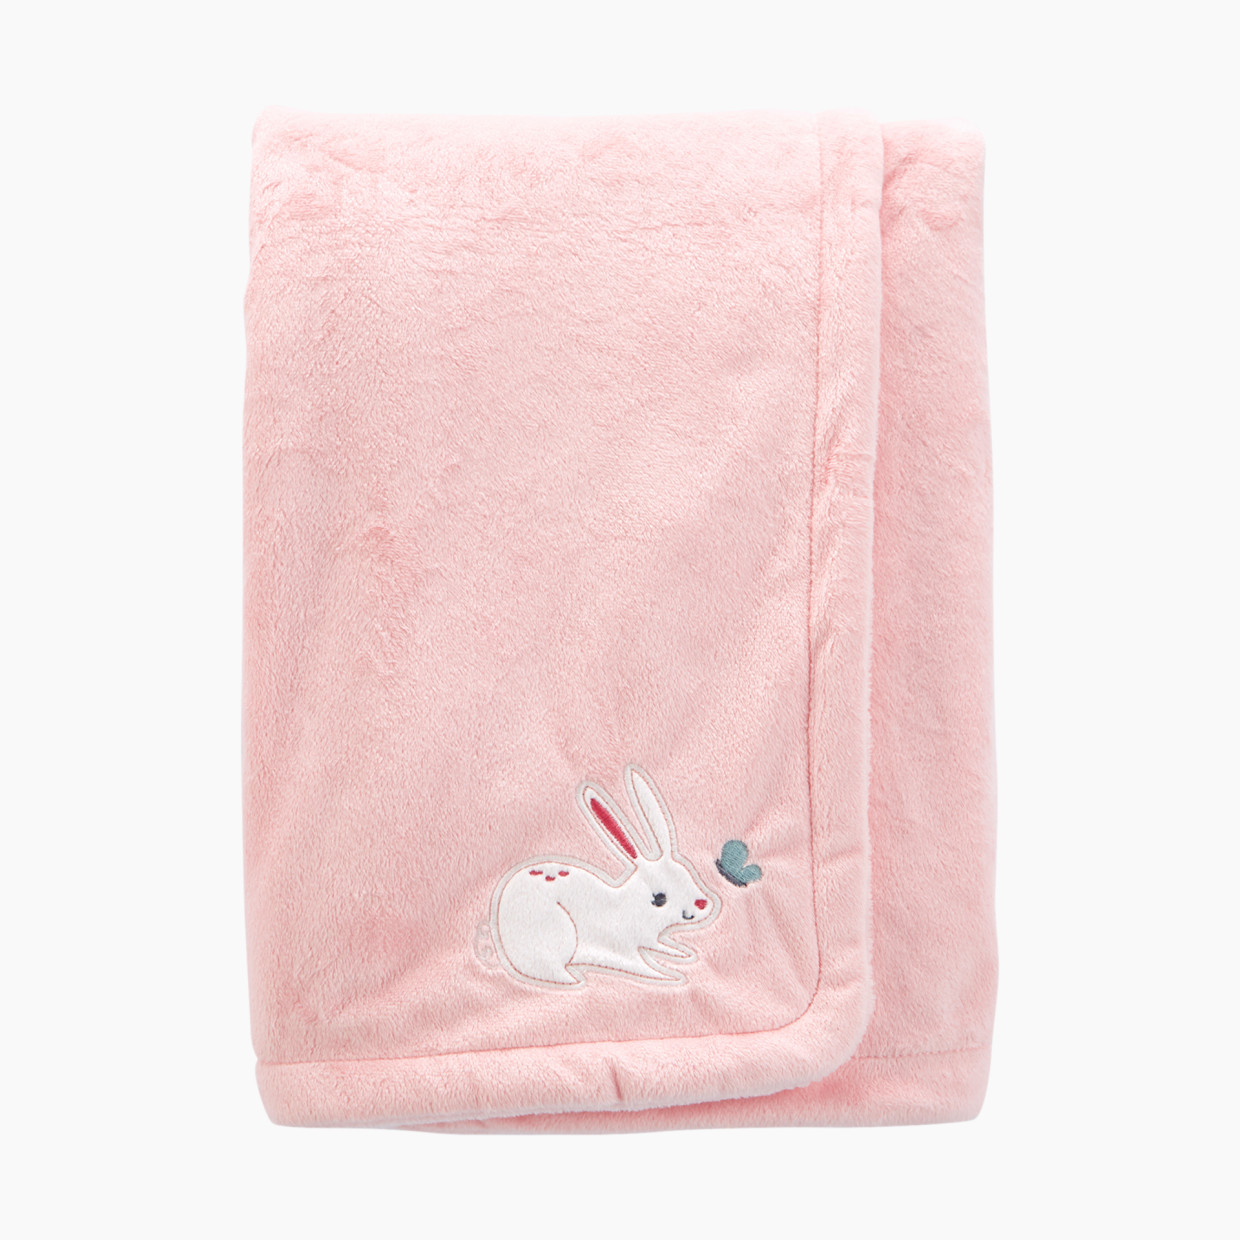 Carter's Fuzzy Plush Blanket - Bunny, Osz.